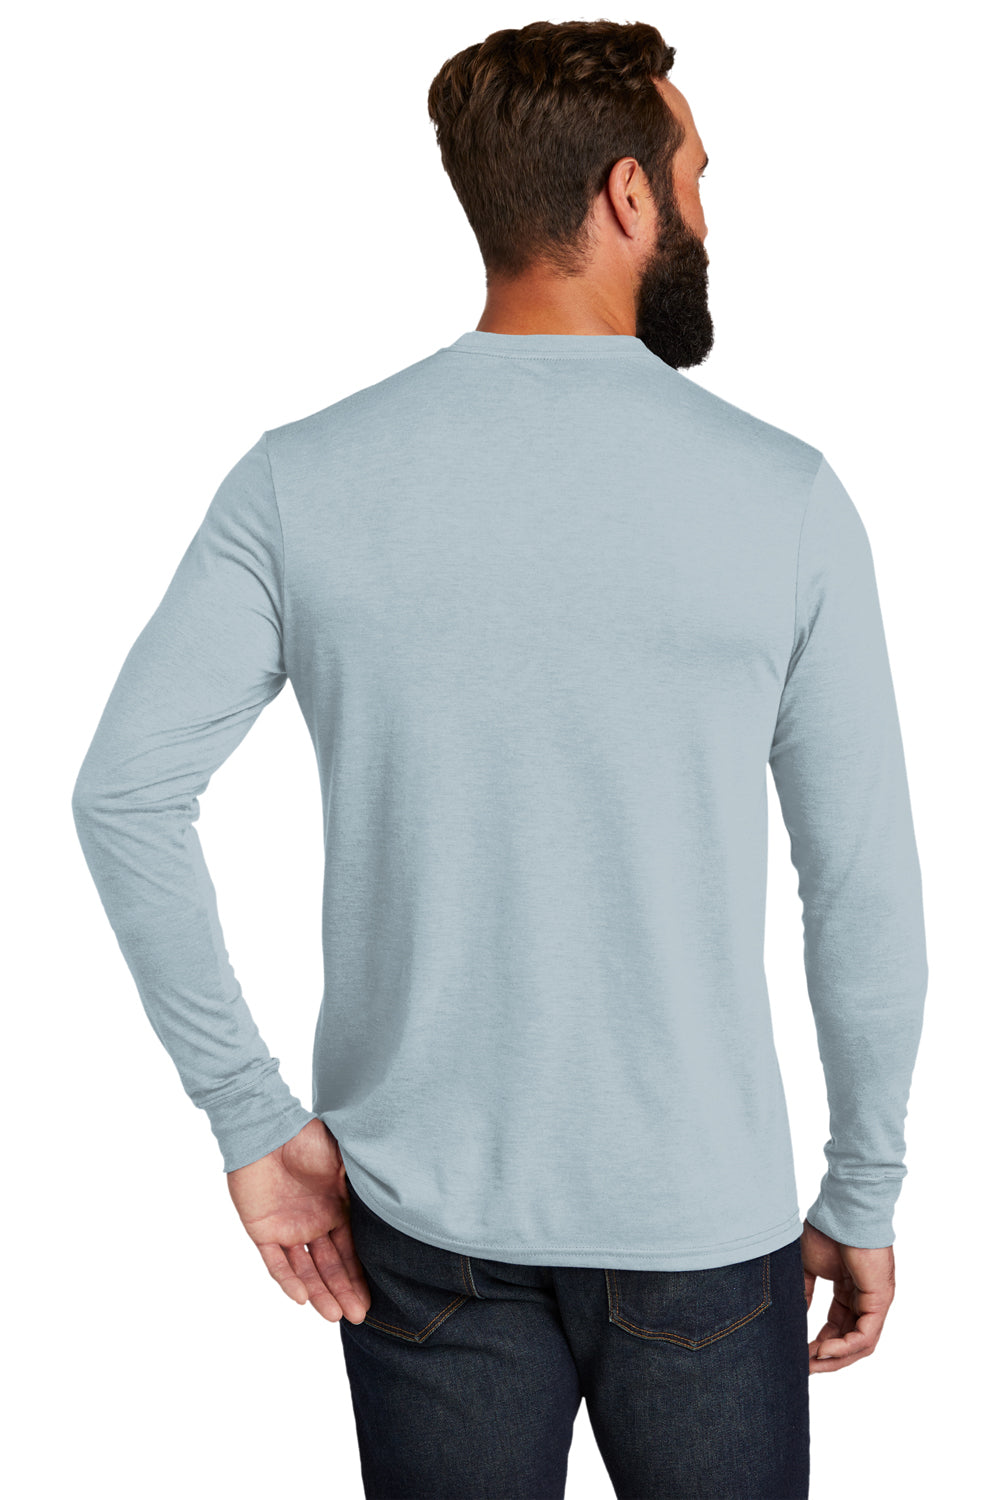 Allmade AL6004 Mens Long Sleeve Crewneck T-Shirt I Like You Blue Model Back